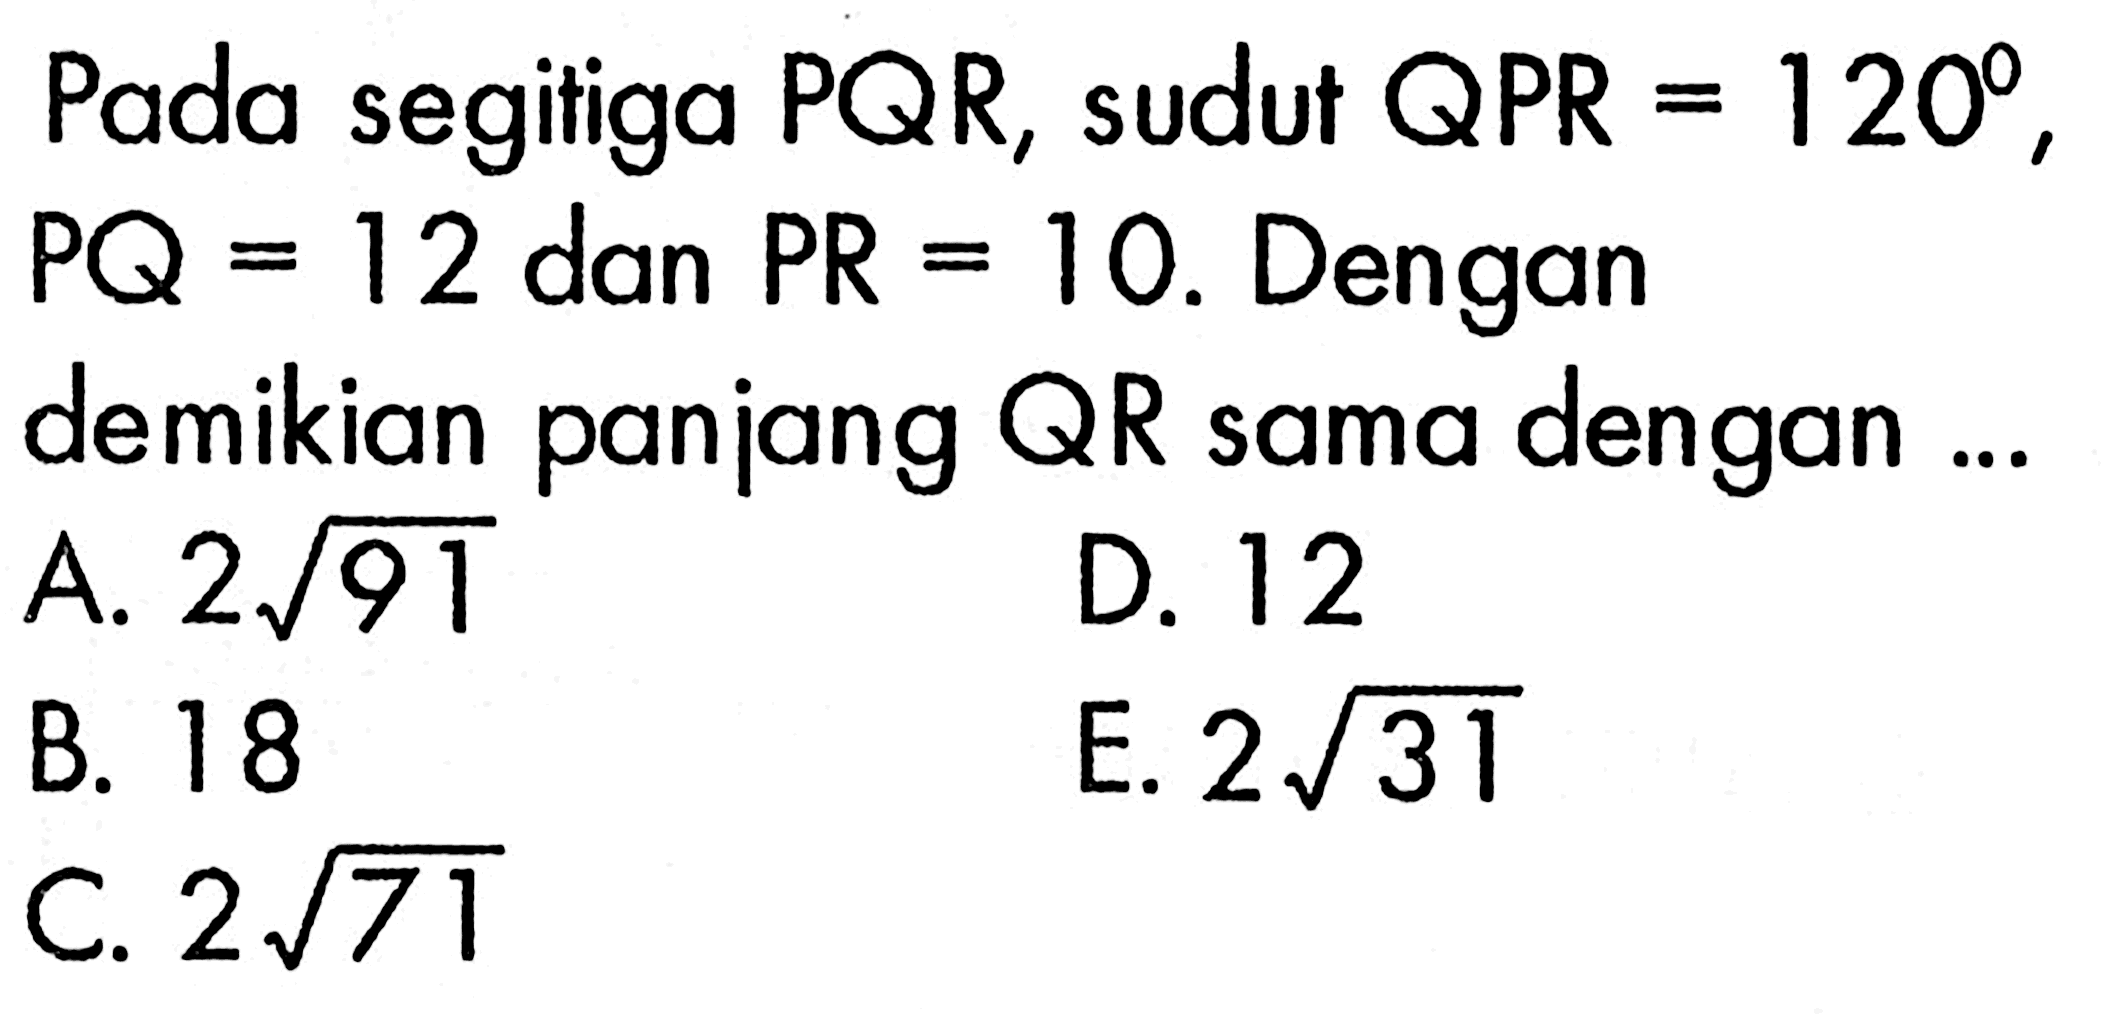 Pada segitiga  PQR , sudut  QPR=120 ,  PQ=12  dan  PR=10 .  Dengan demikian panjang  QR  sama dengan ...